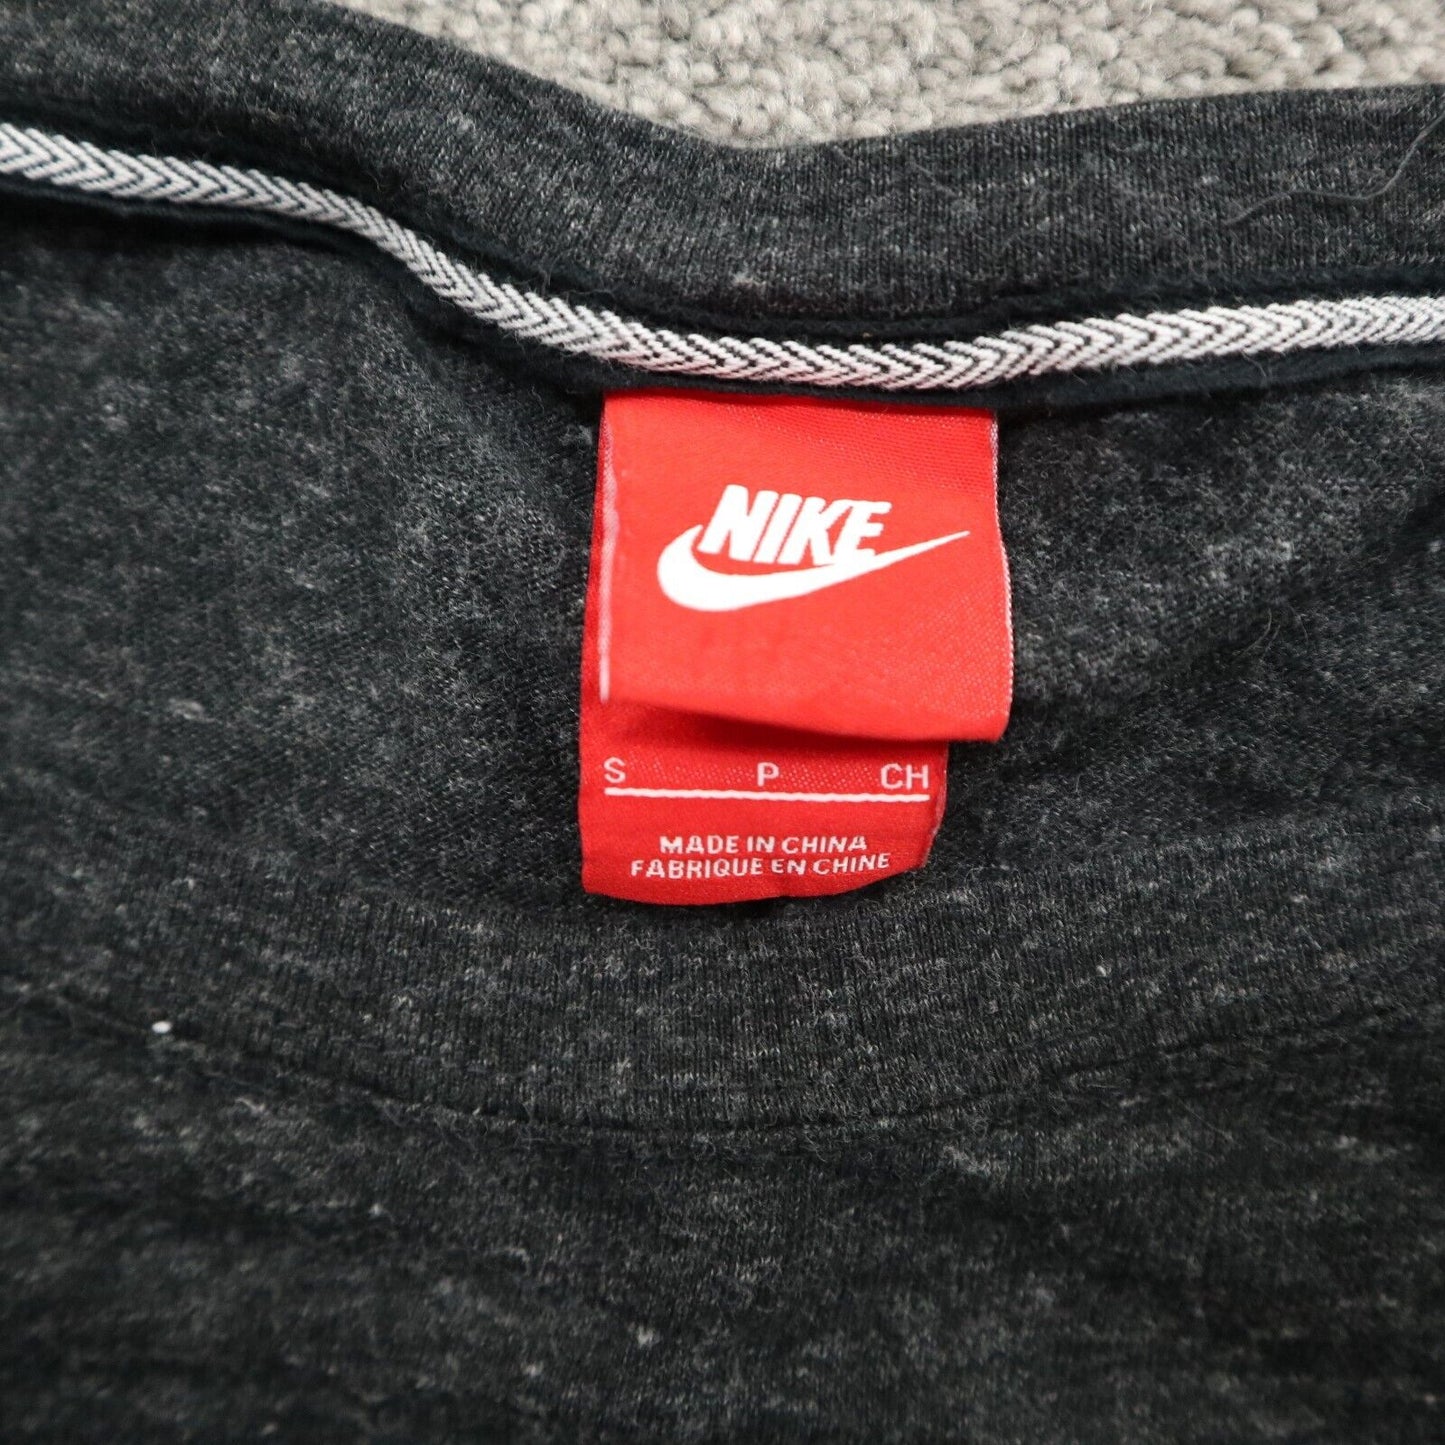 Nike Womens Pullover Sweatshirt Long Sleeve Round Neck Black Size Small Petits